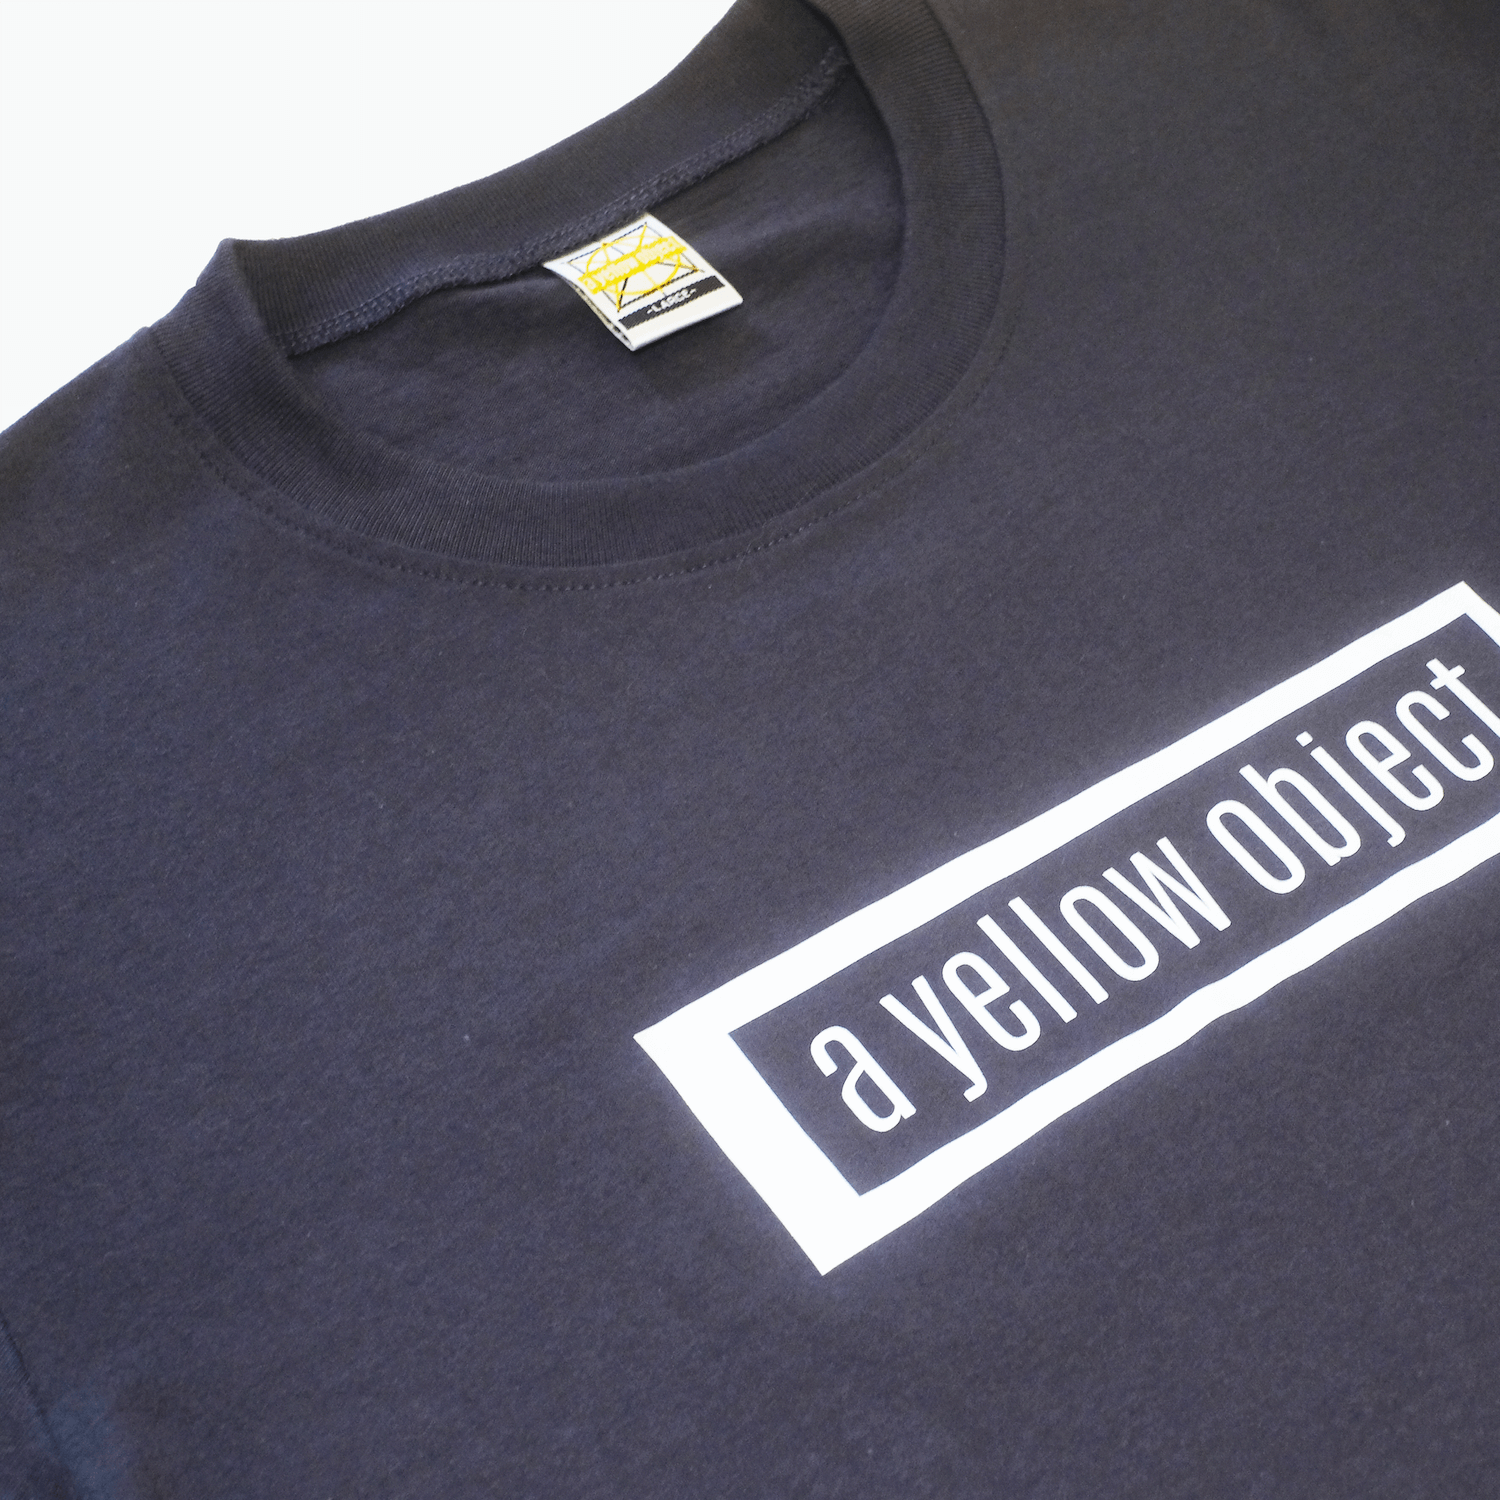 Superme Box Long Sleeve T-Shirt (Gray) - a yellow object